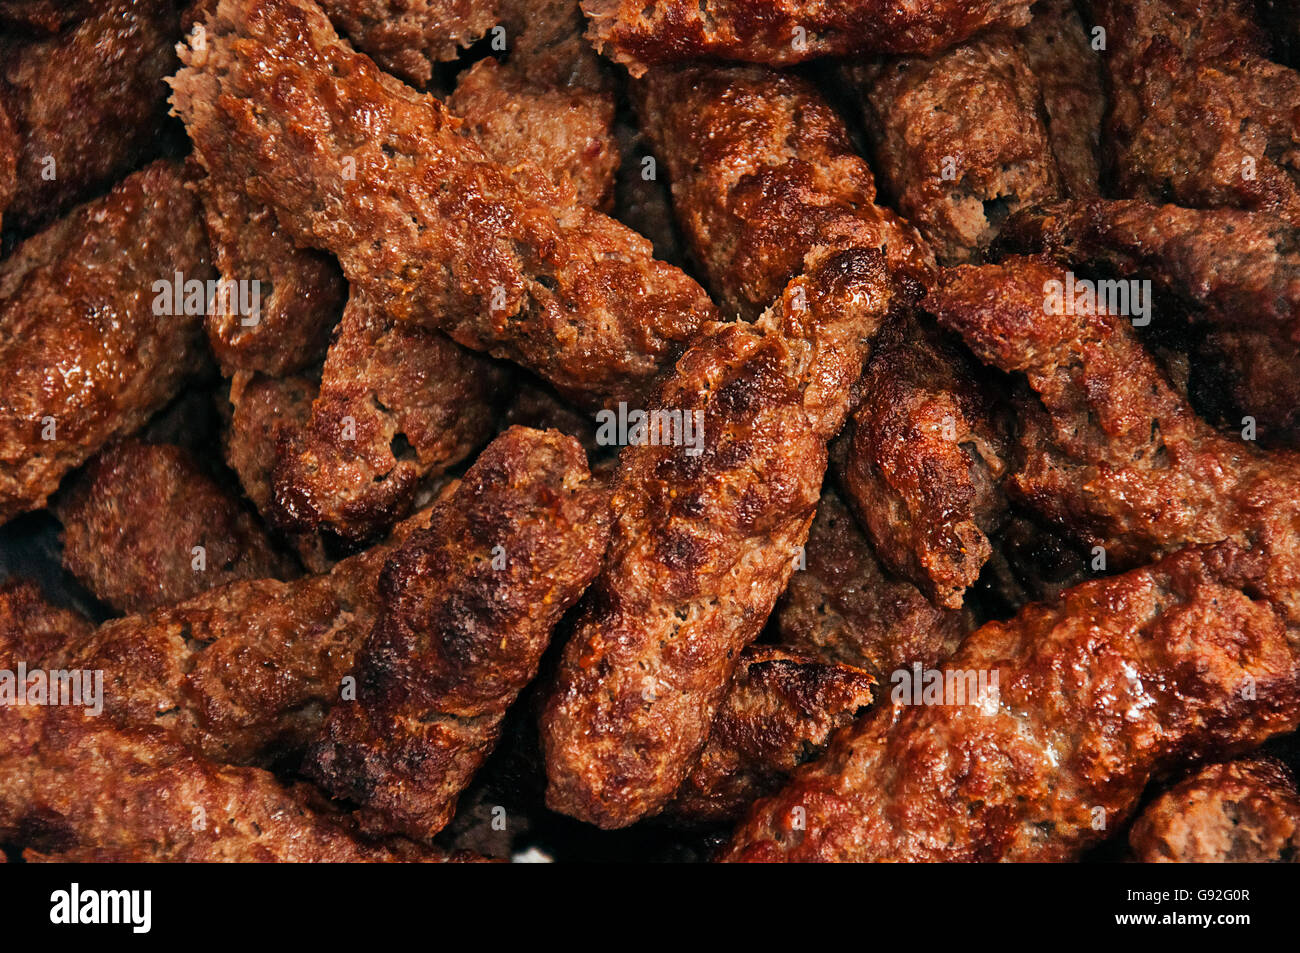 A Textured Background of Grilled Kofta Sticks Stock Photo - Alamy